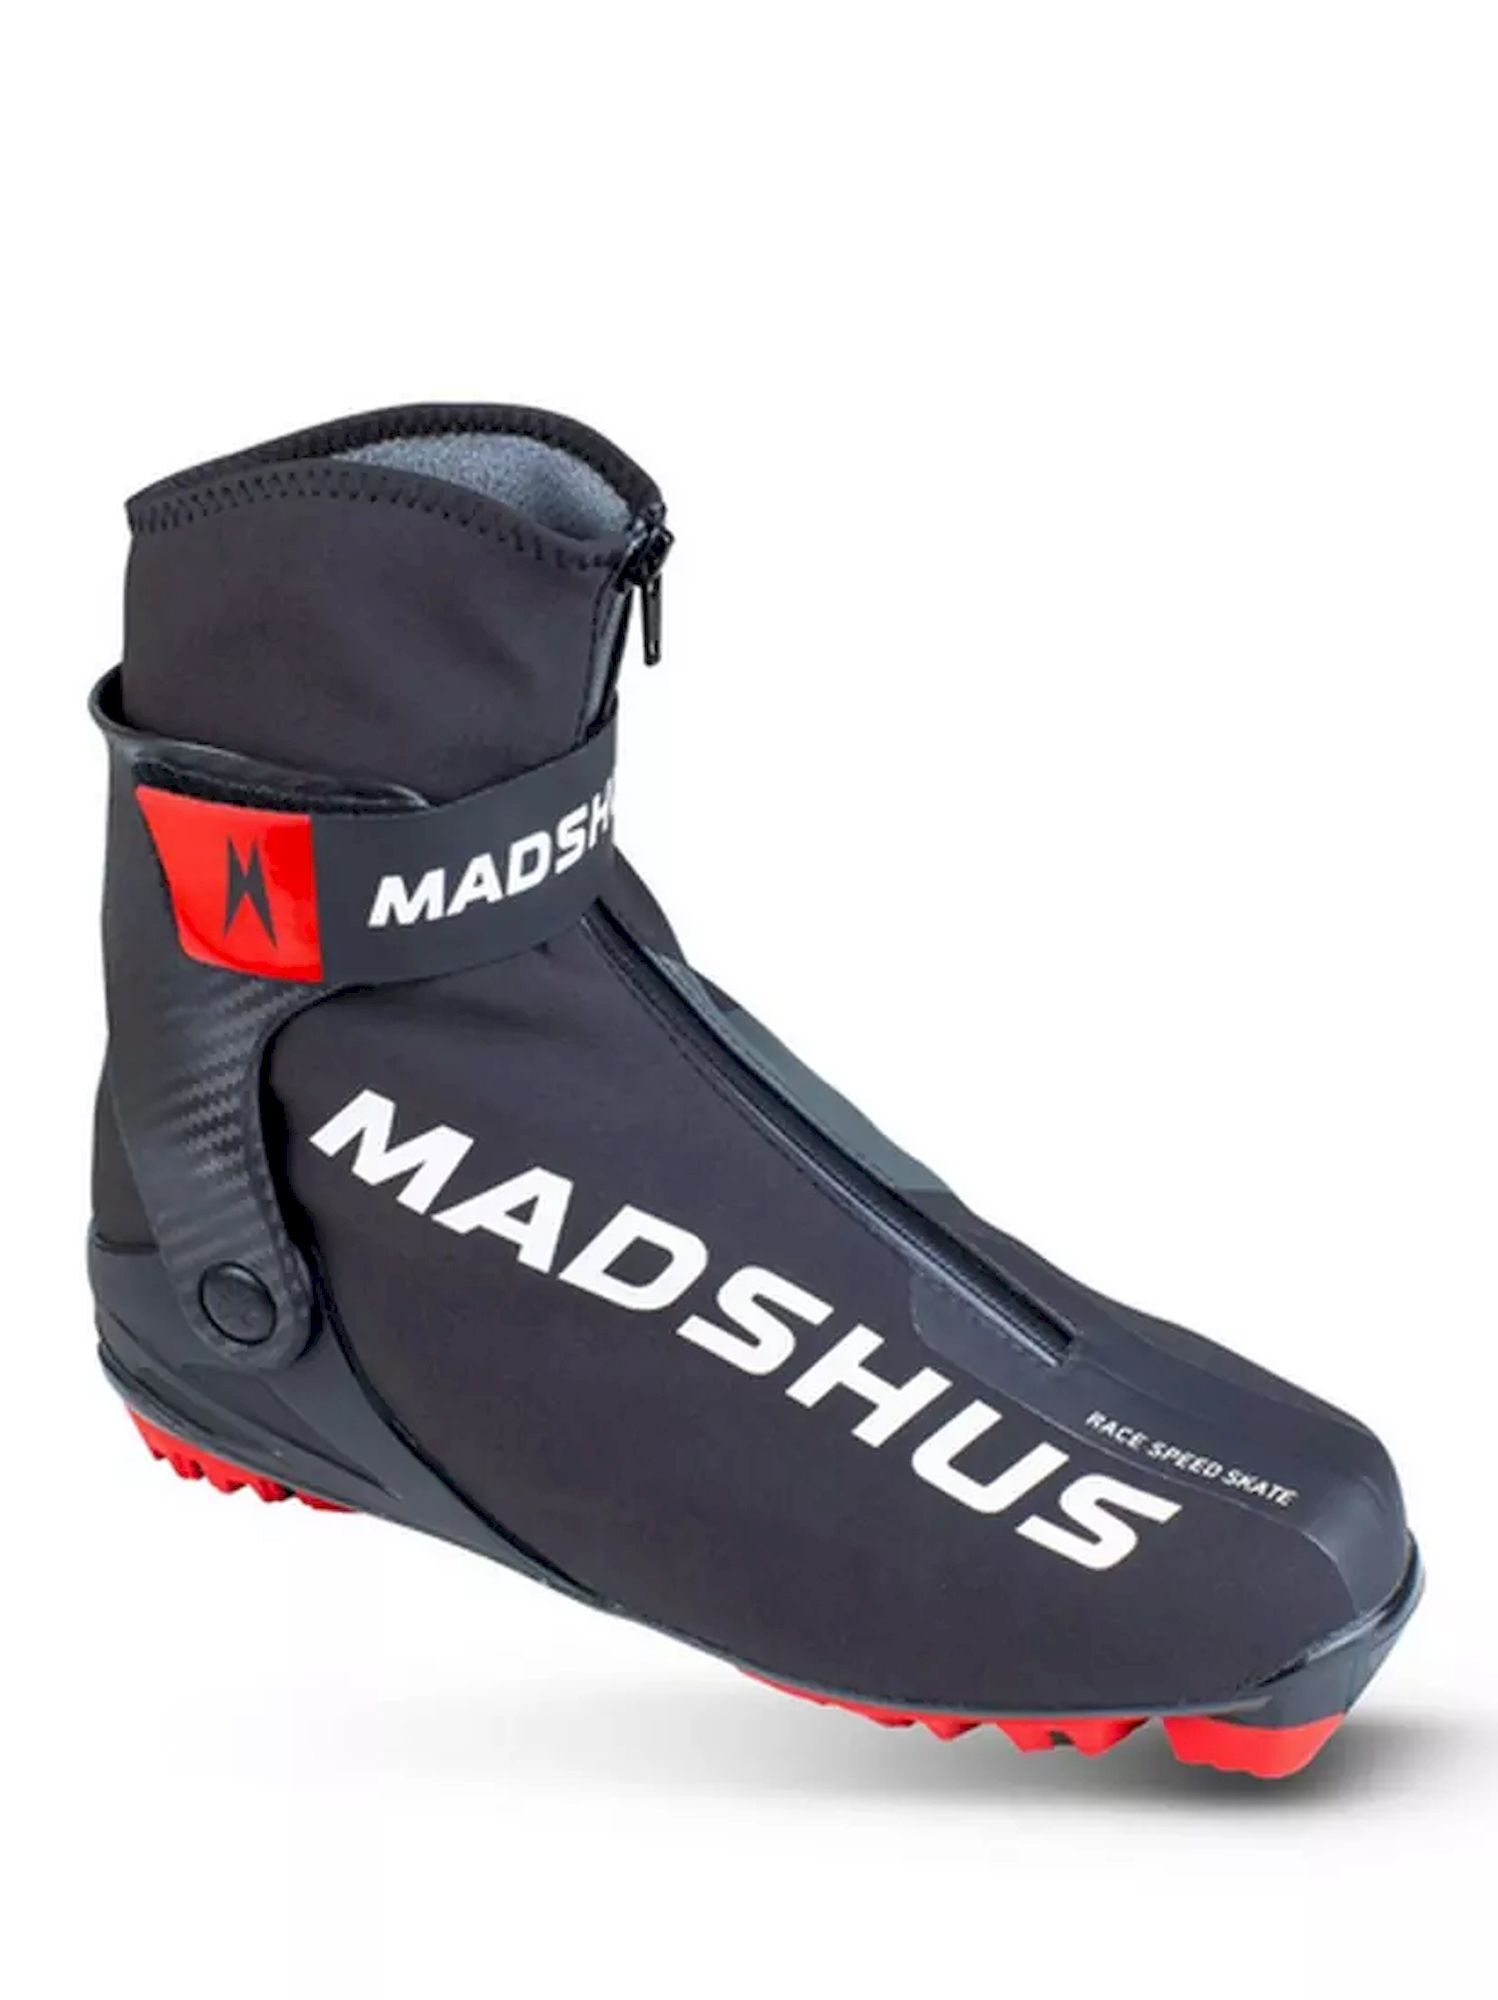 Madshus Race Speed Skate - Buty do nart biegowych | Hardloop